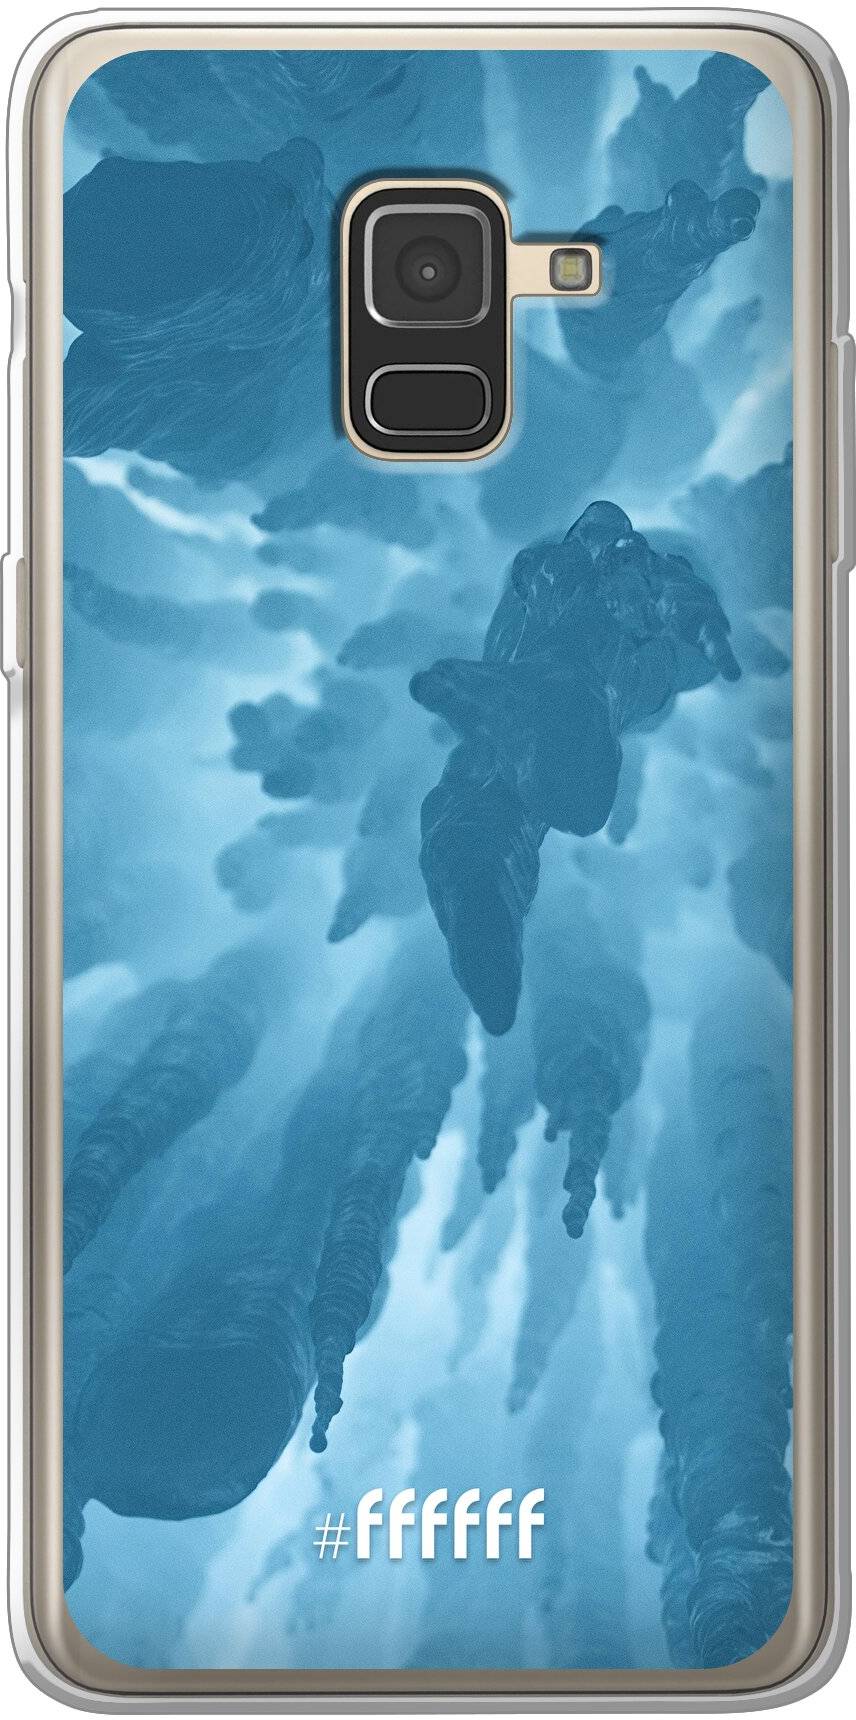 Ice Stalactite Galaxy A8 (2018)